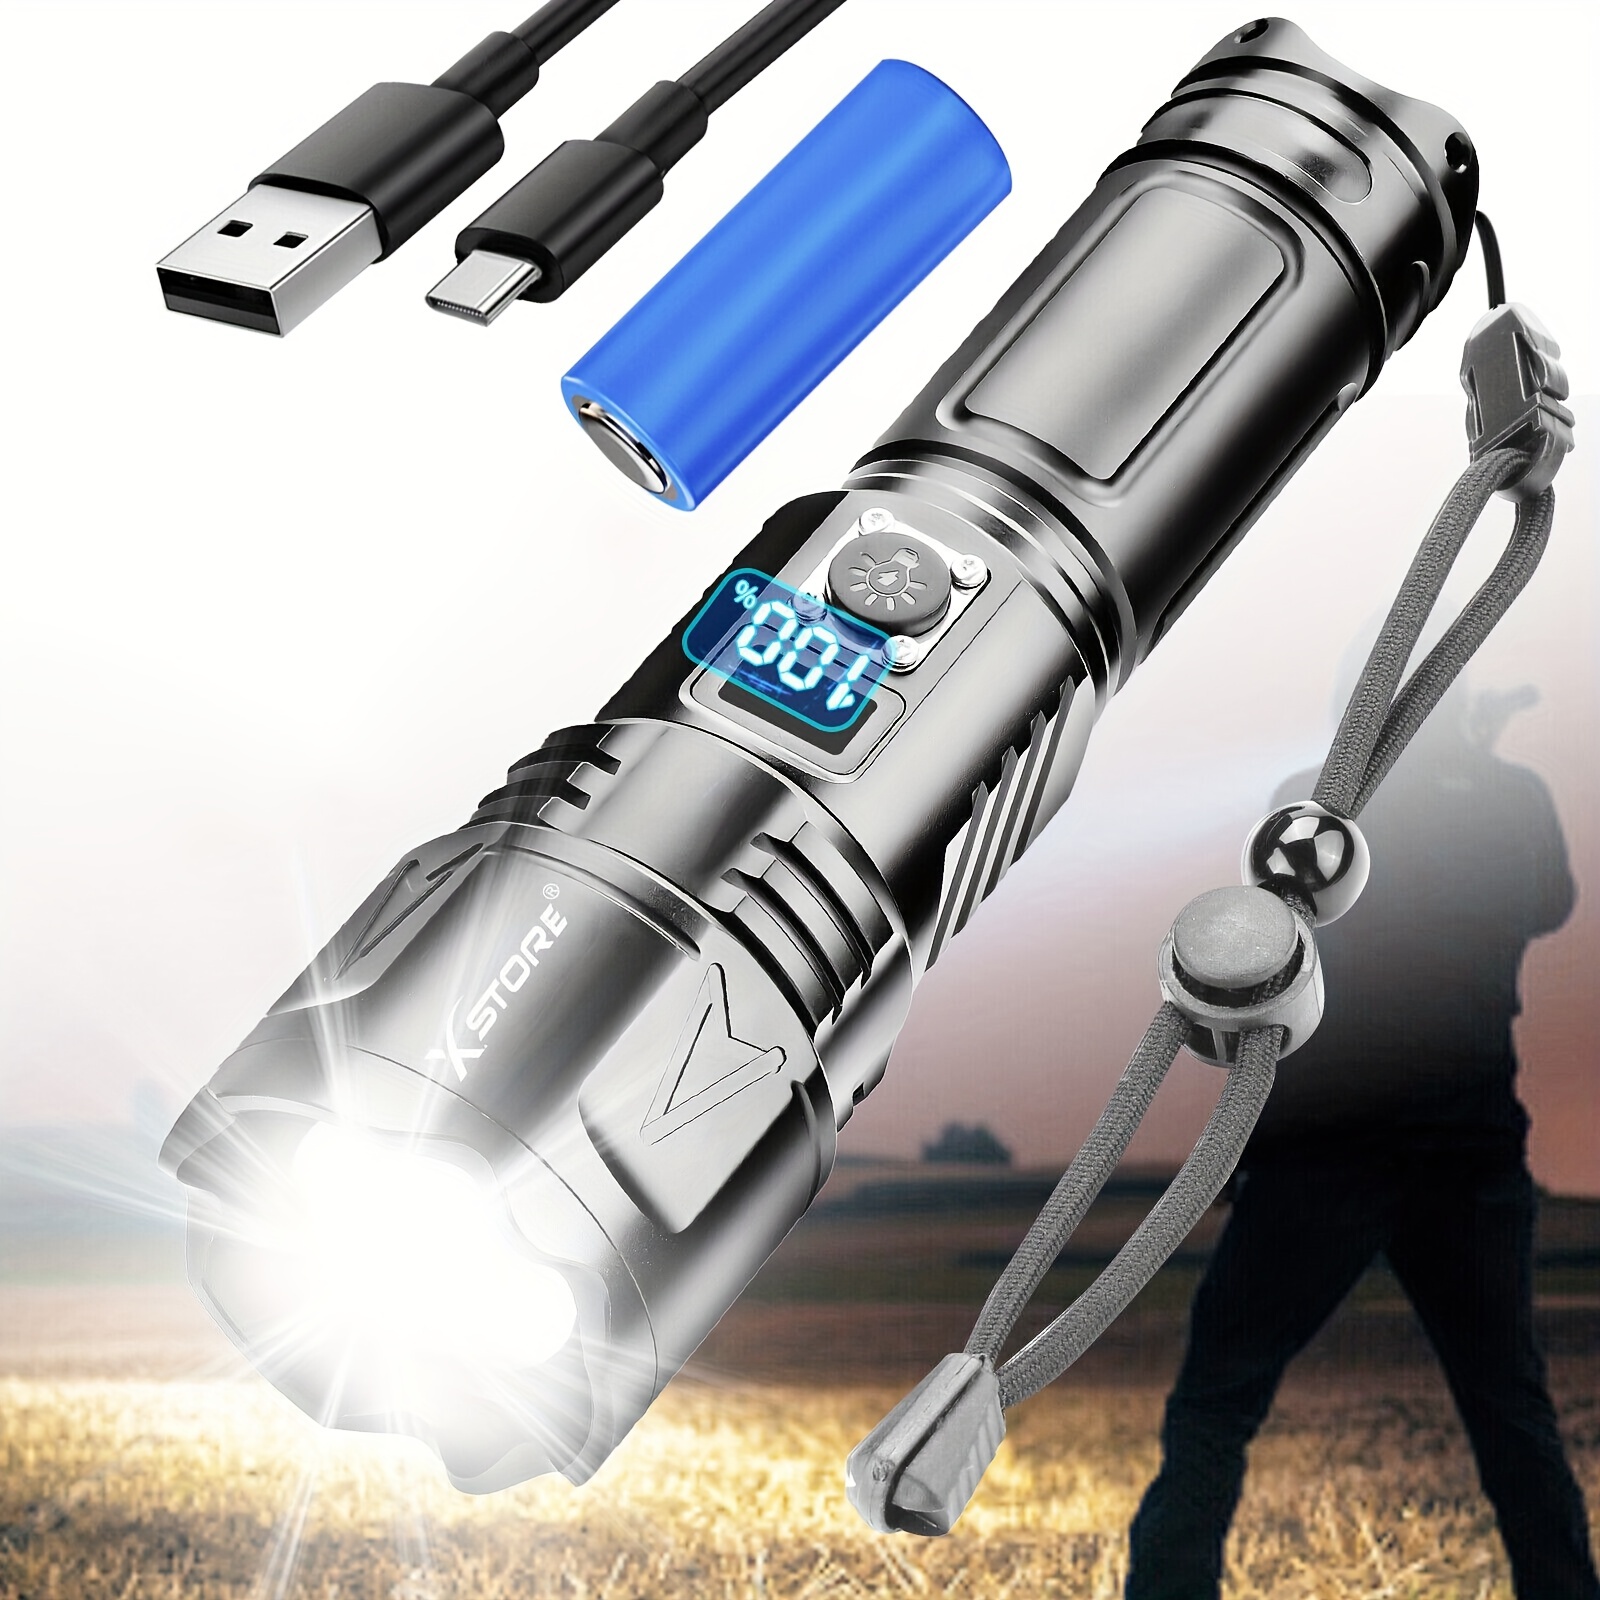 WUBEN C3 LED Flashlight USB C Rechargeable Torch 1200